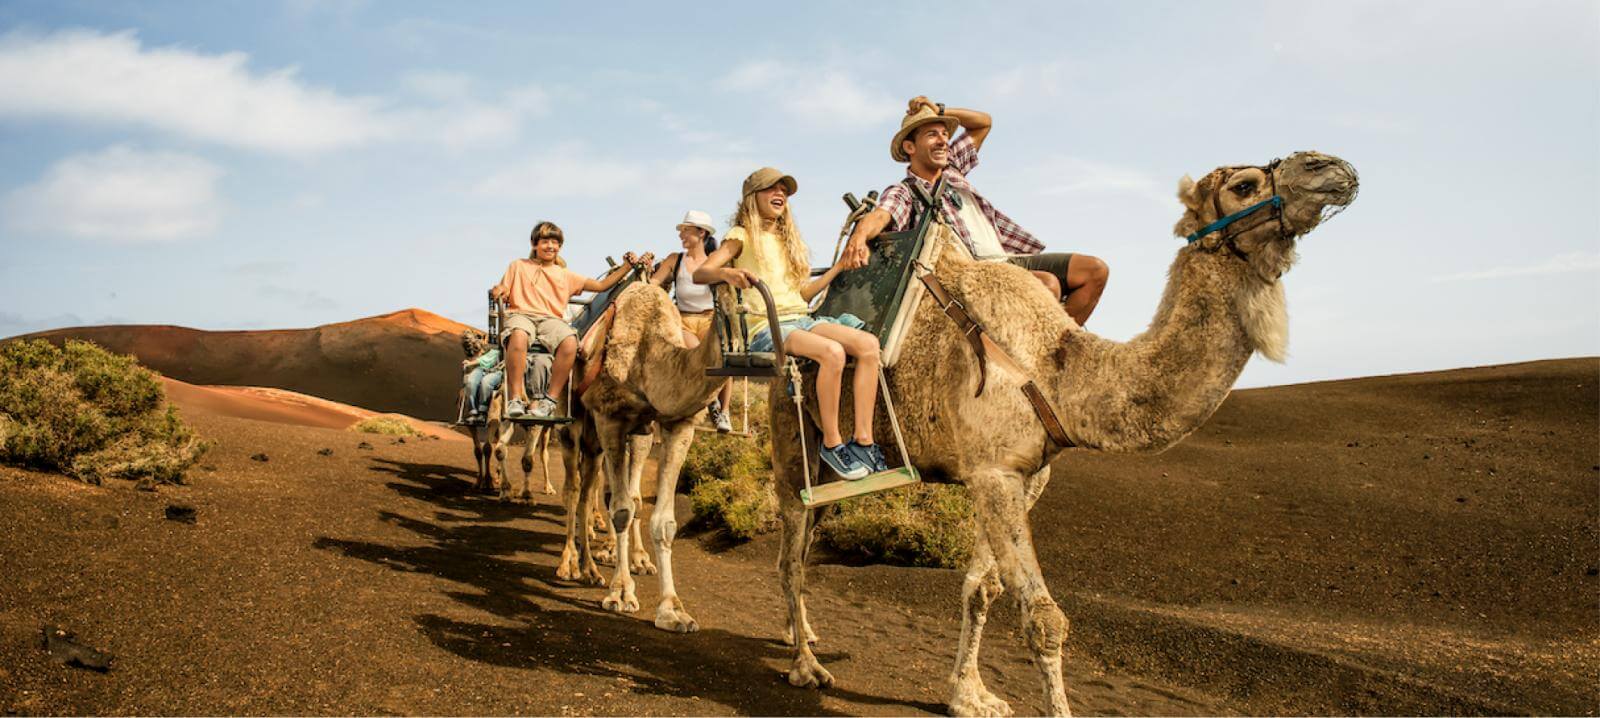 Paseo en camello, Timanfaya 